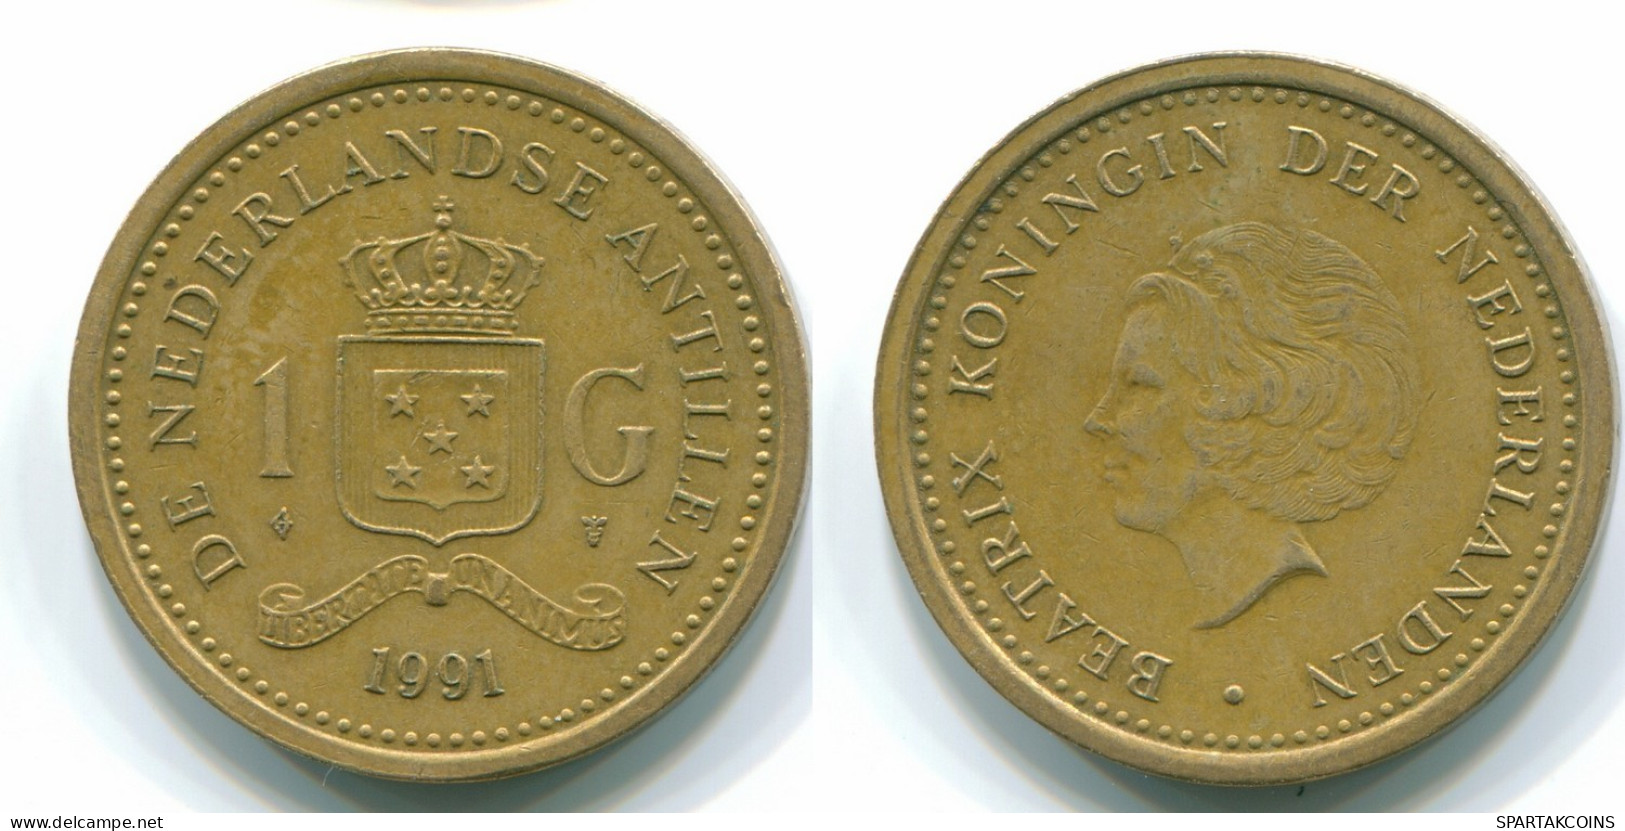 1 GULDEN 1991 NETHERLANDS ANTILLES Aureate Steel Colonial Coin #S12117.U.A - Nederlandse Antillen